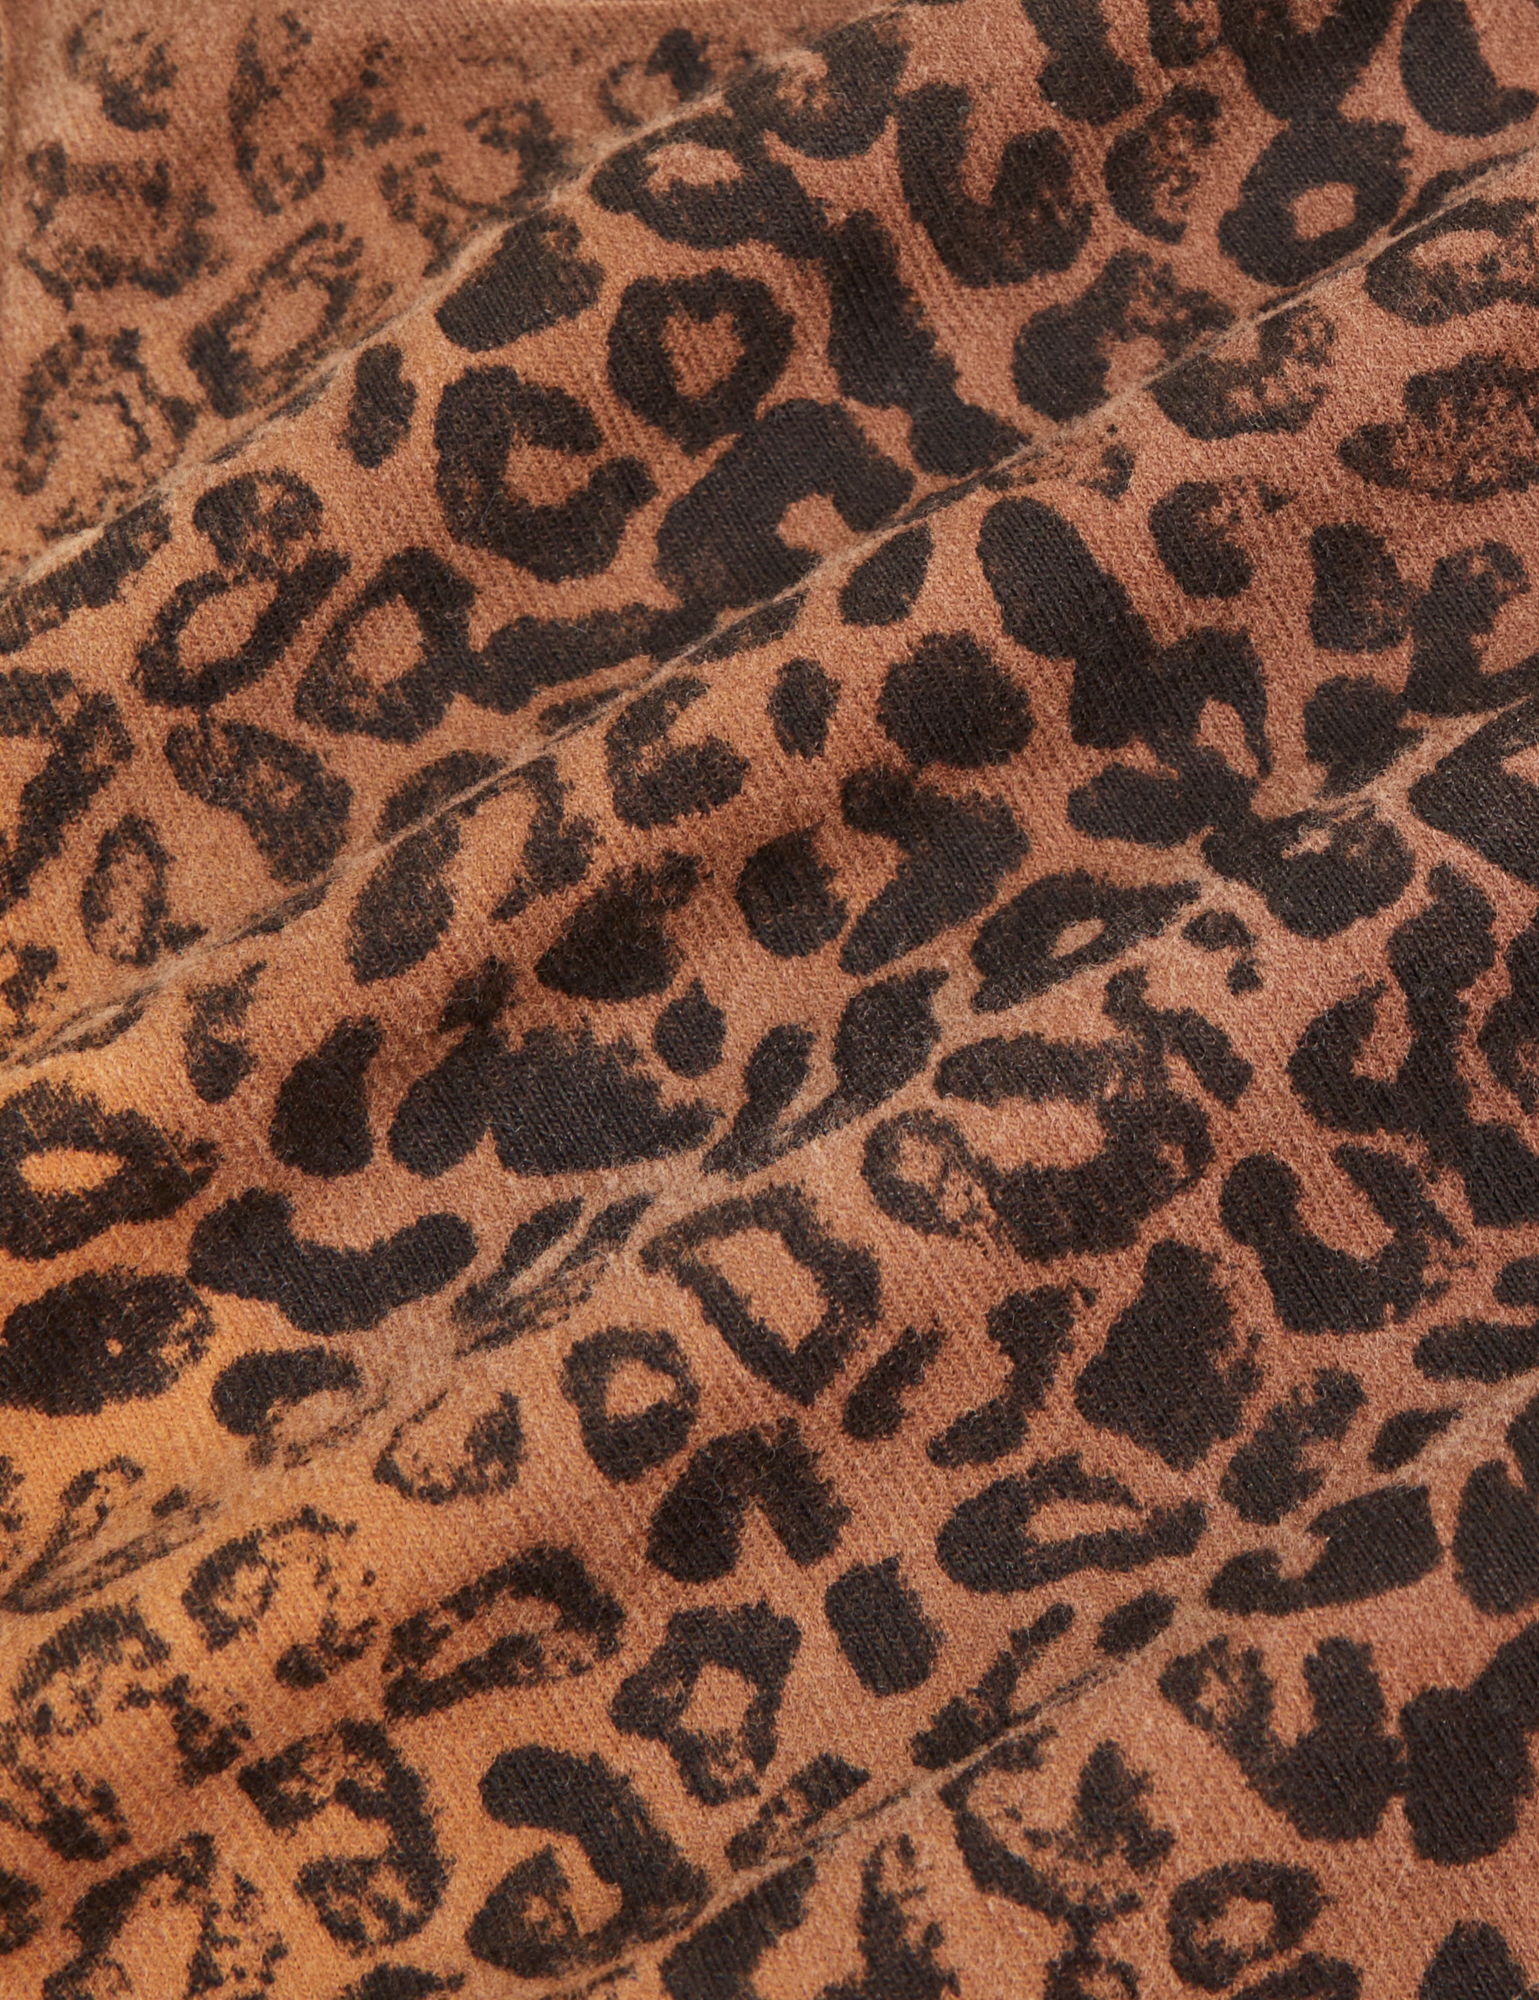  Leopard Print Halter Top fabric detail close up